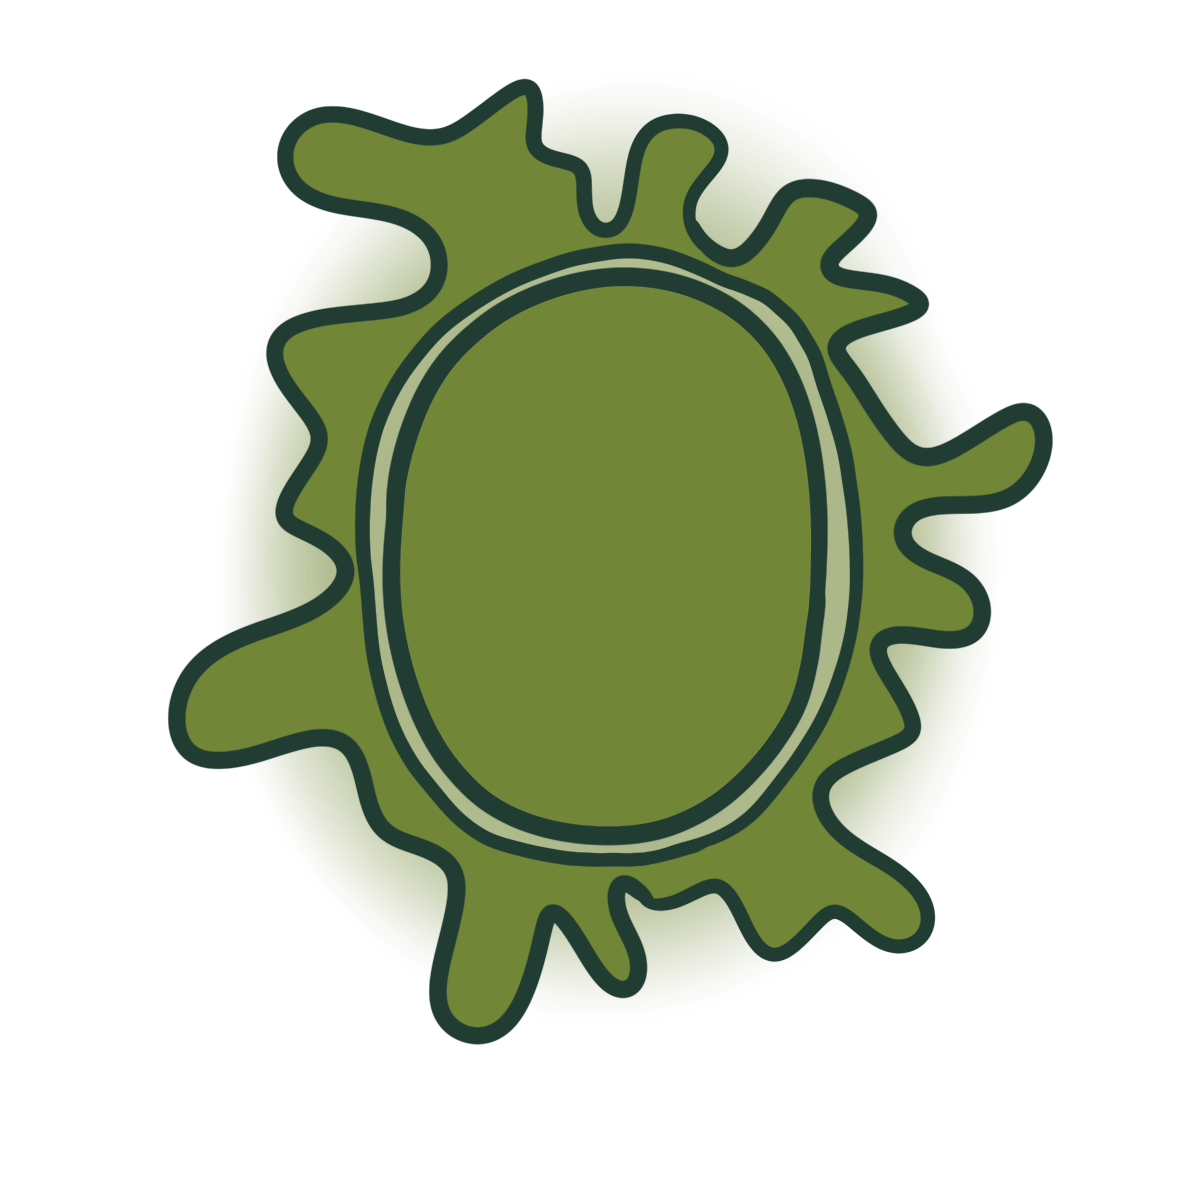 A yellowy green oval with a splatting blob shape encircling it.